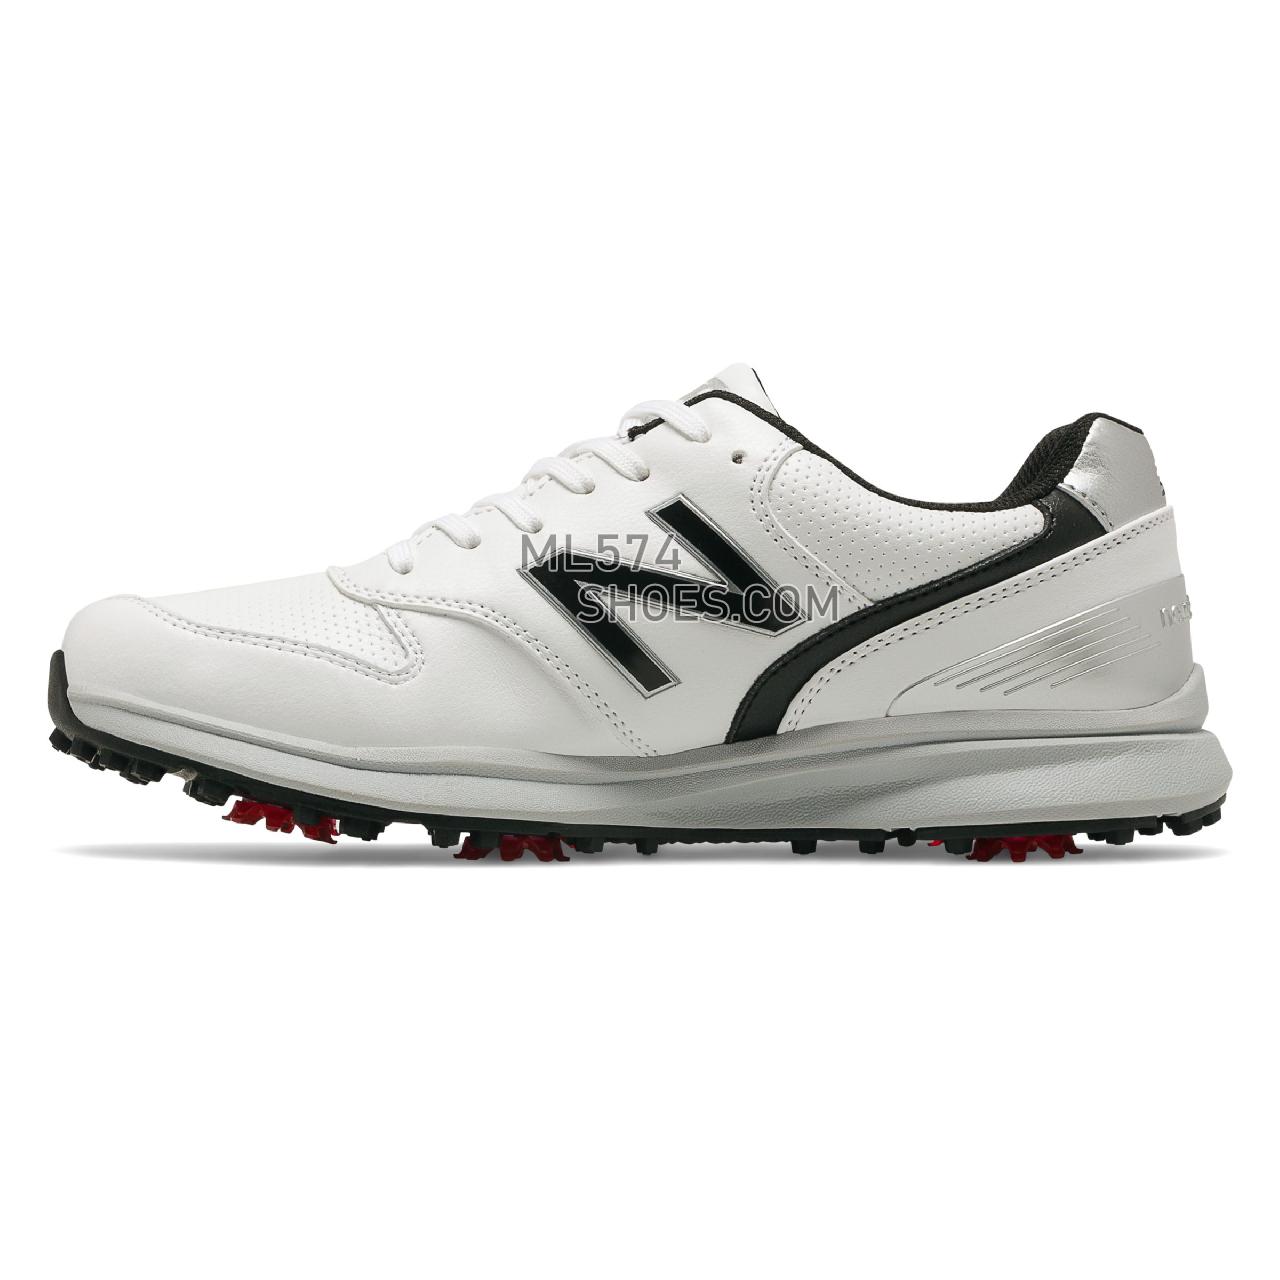 New Balance Sweeper - Men's Golf - White with Black - NBG1800WK